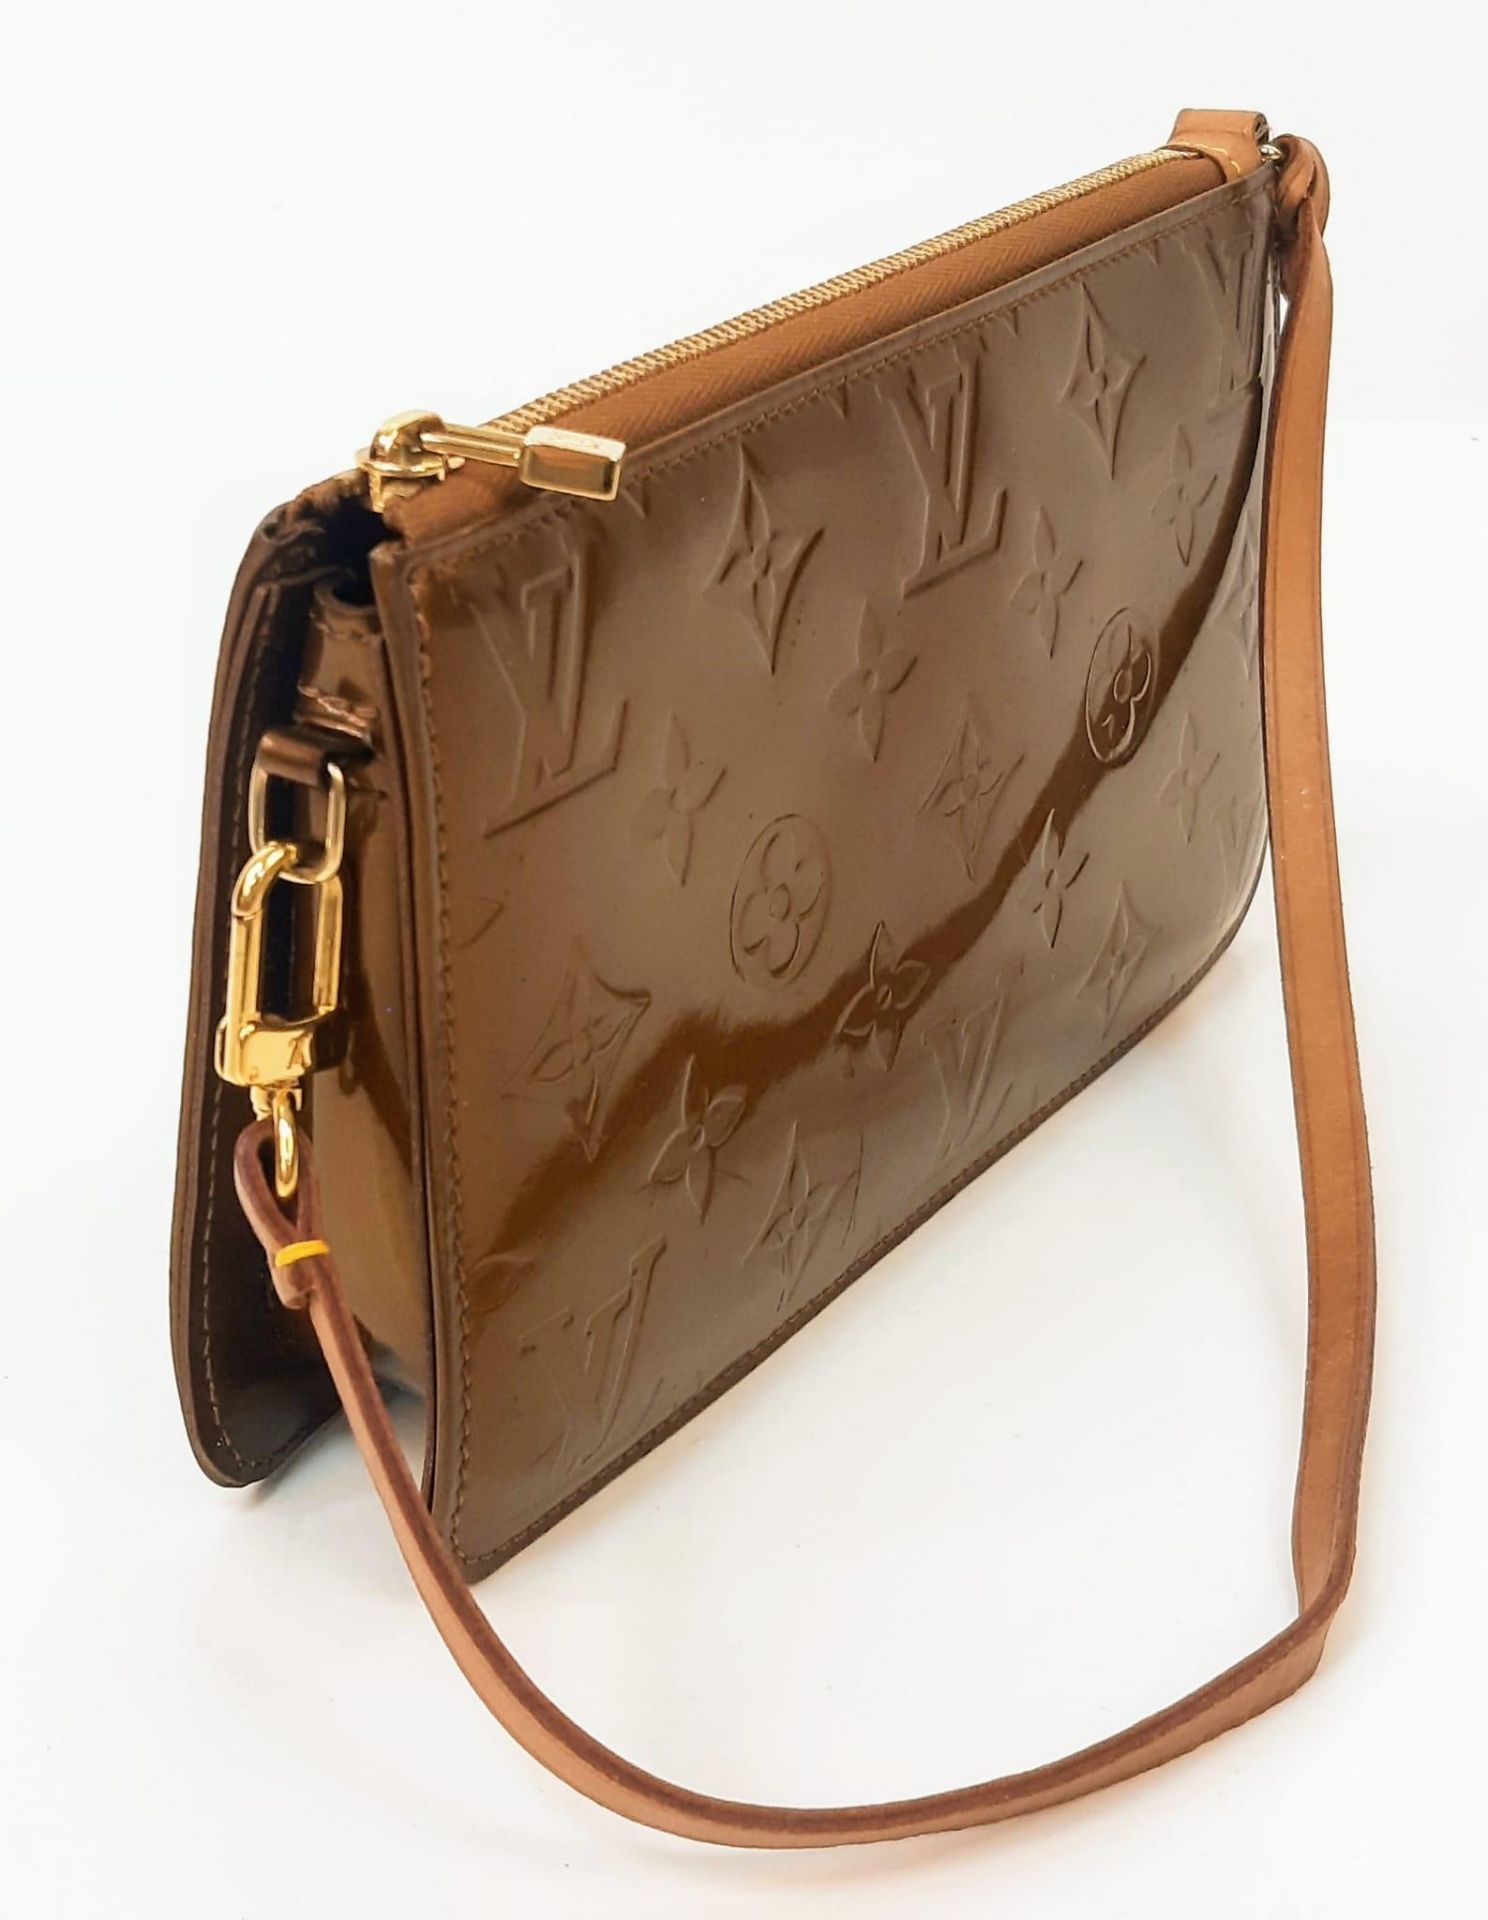 A Louis Vuitton Vernis Pochette Shoulder Bag in Copper, Emboss LV Detailing, Dark Tan Leather Strap. - Image 2 of 7